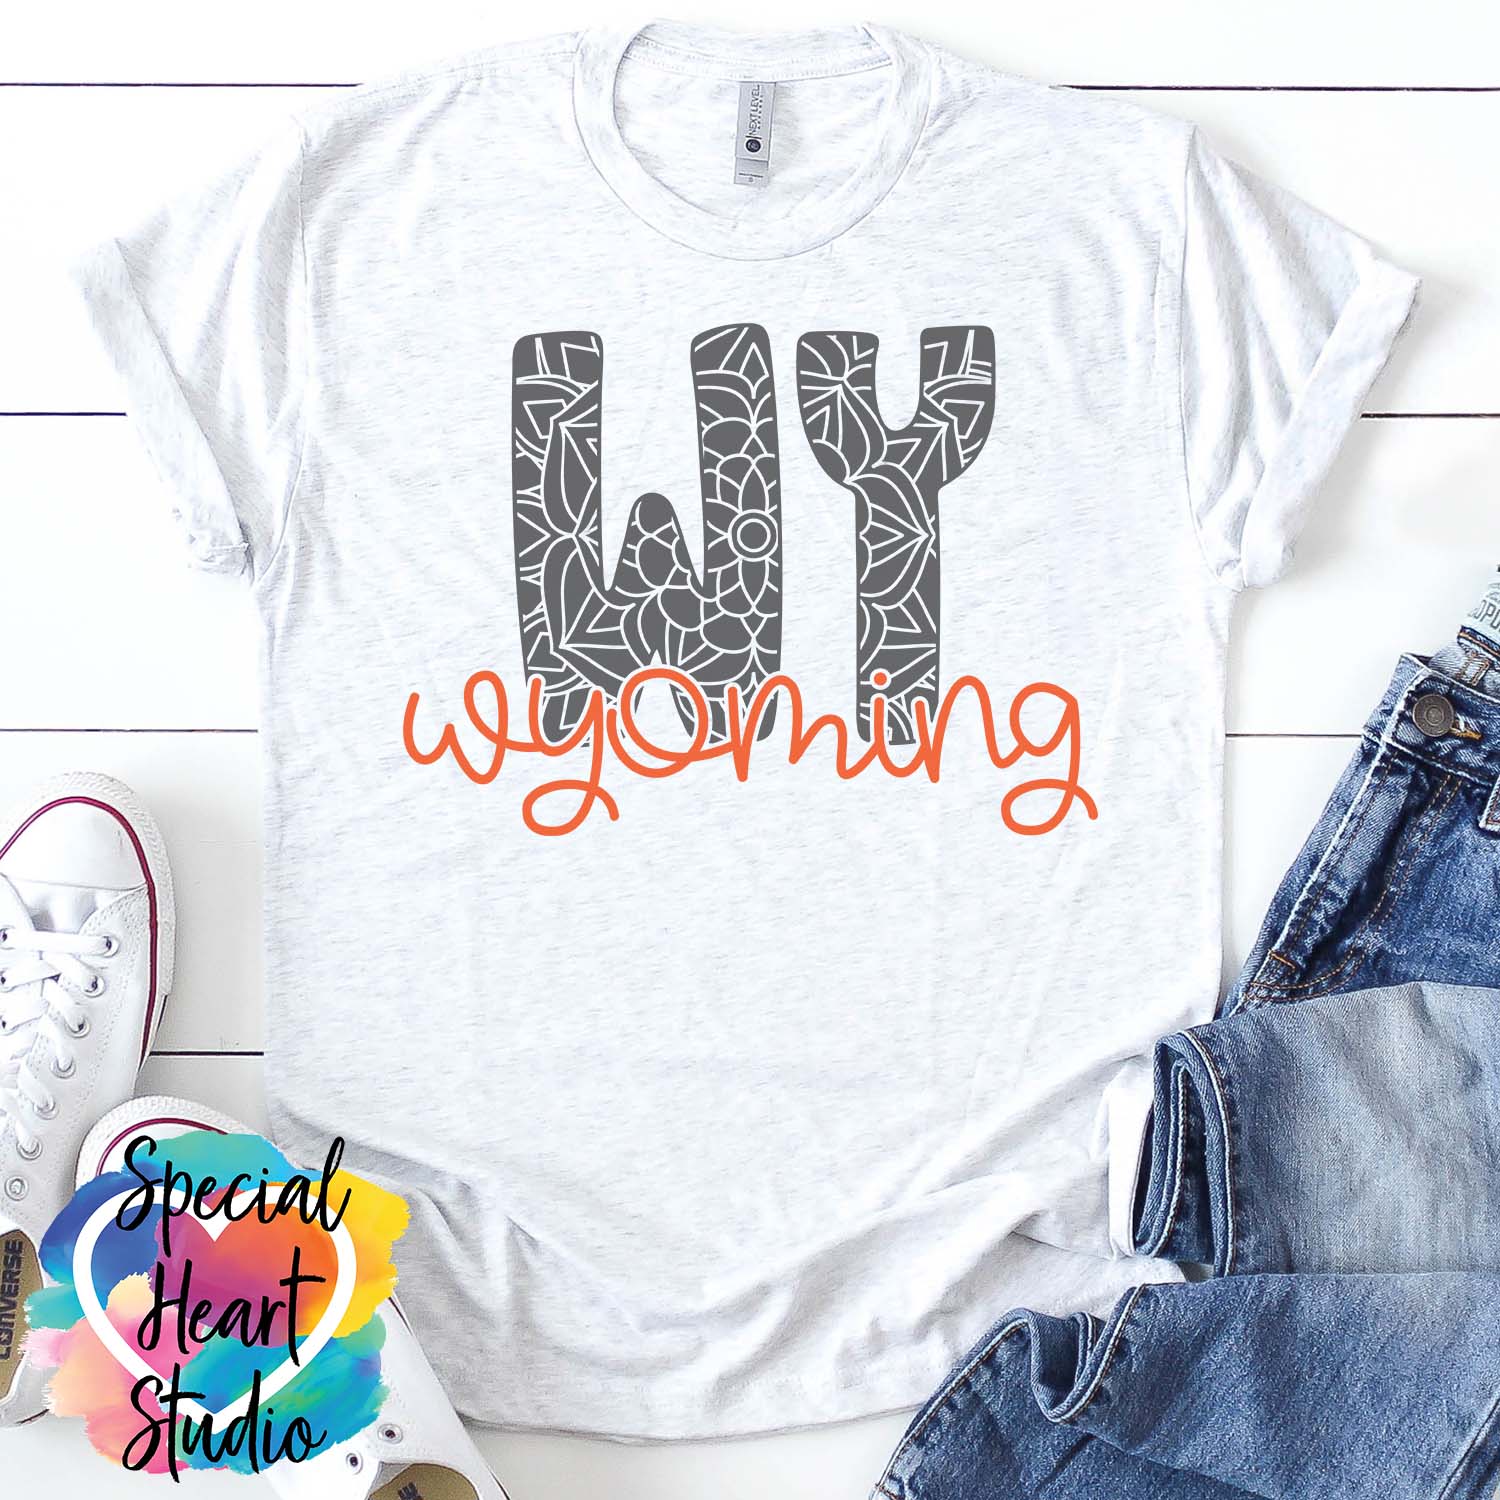 Wyoming mandala SVG shirt mockup